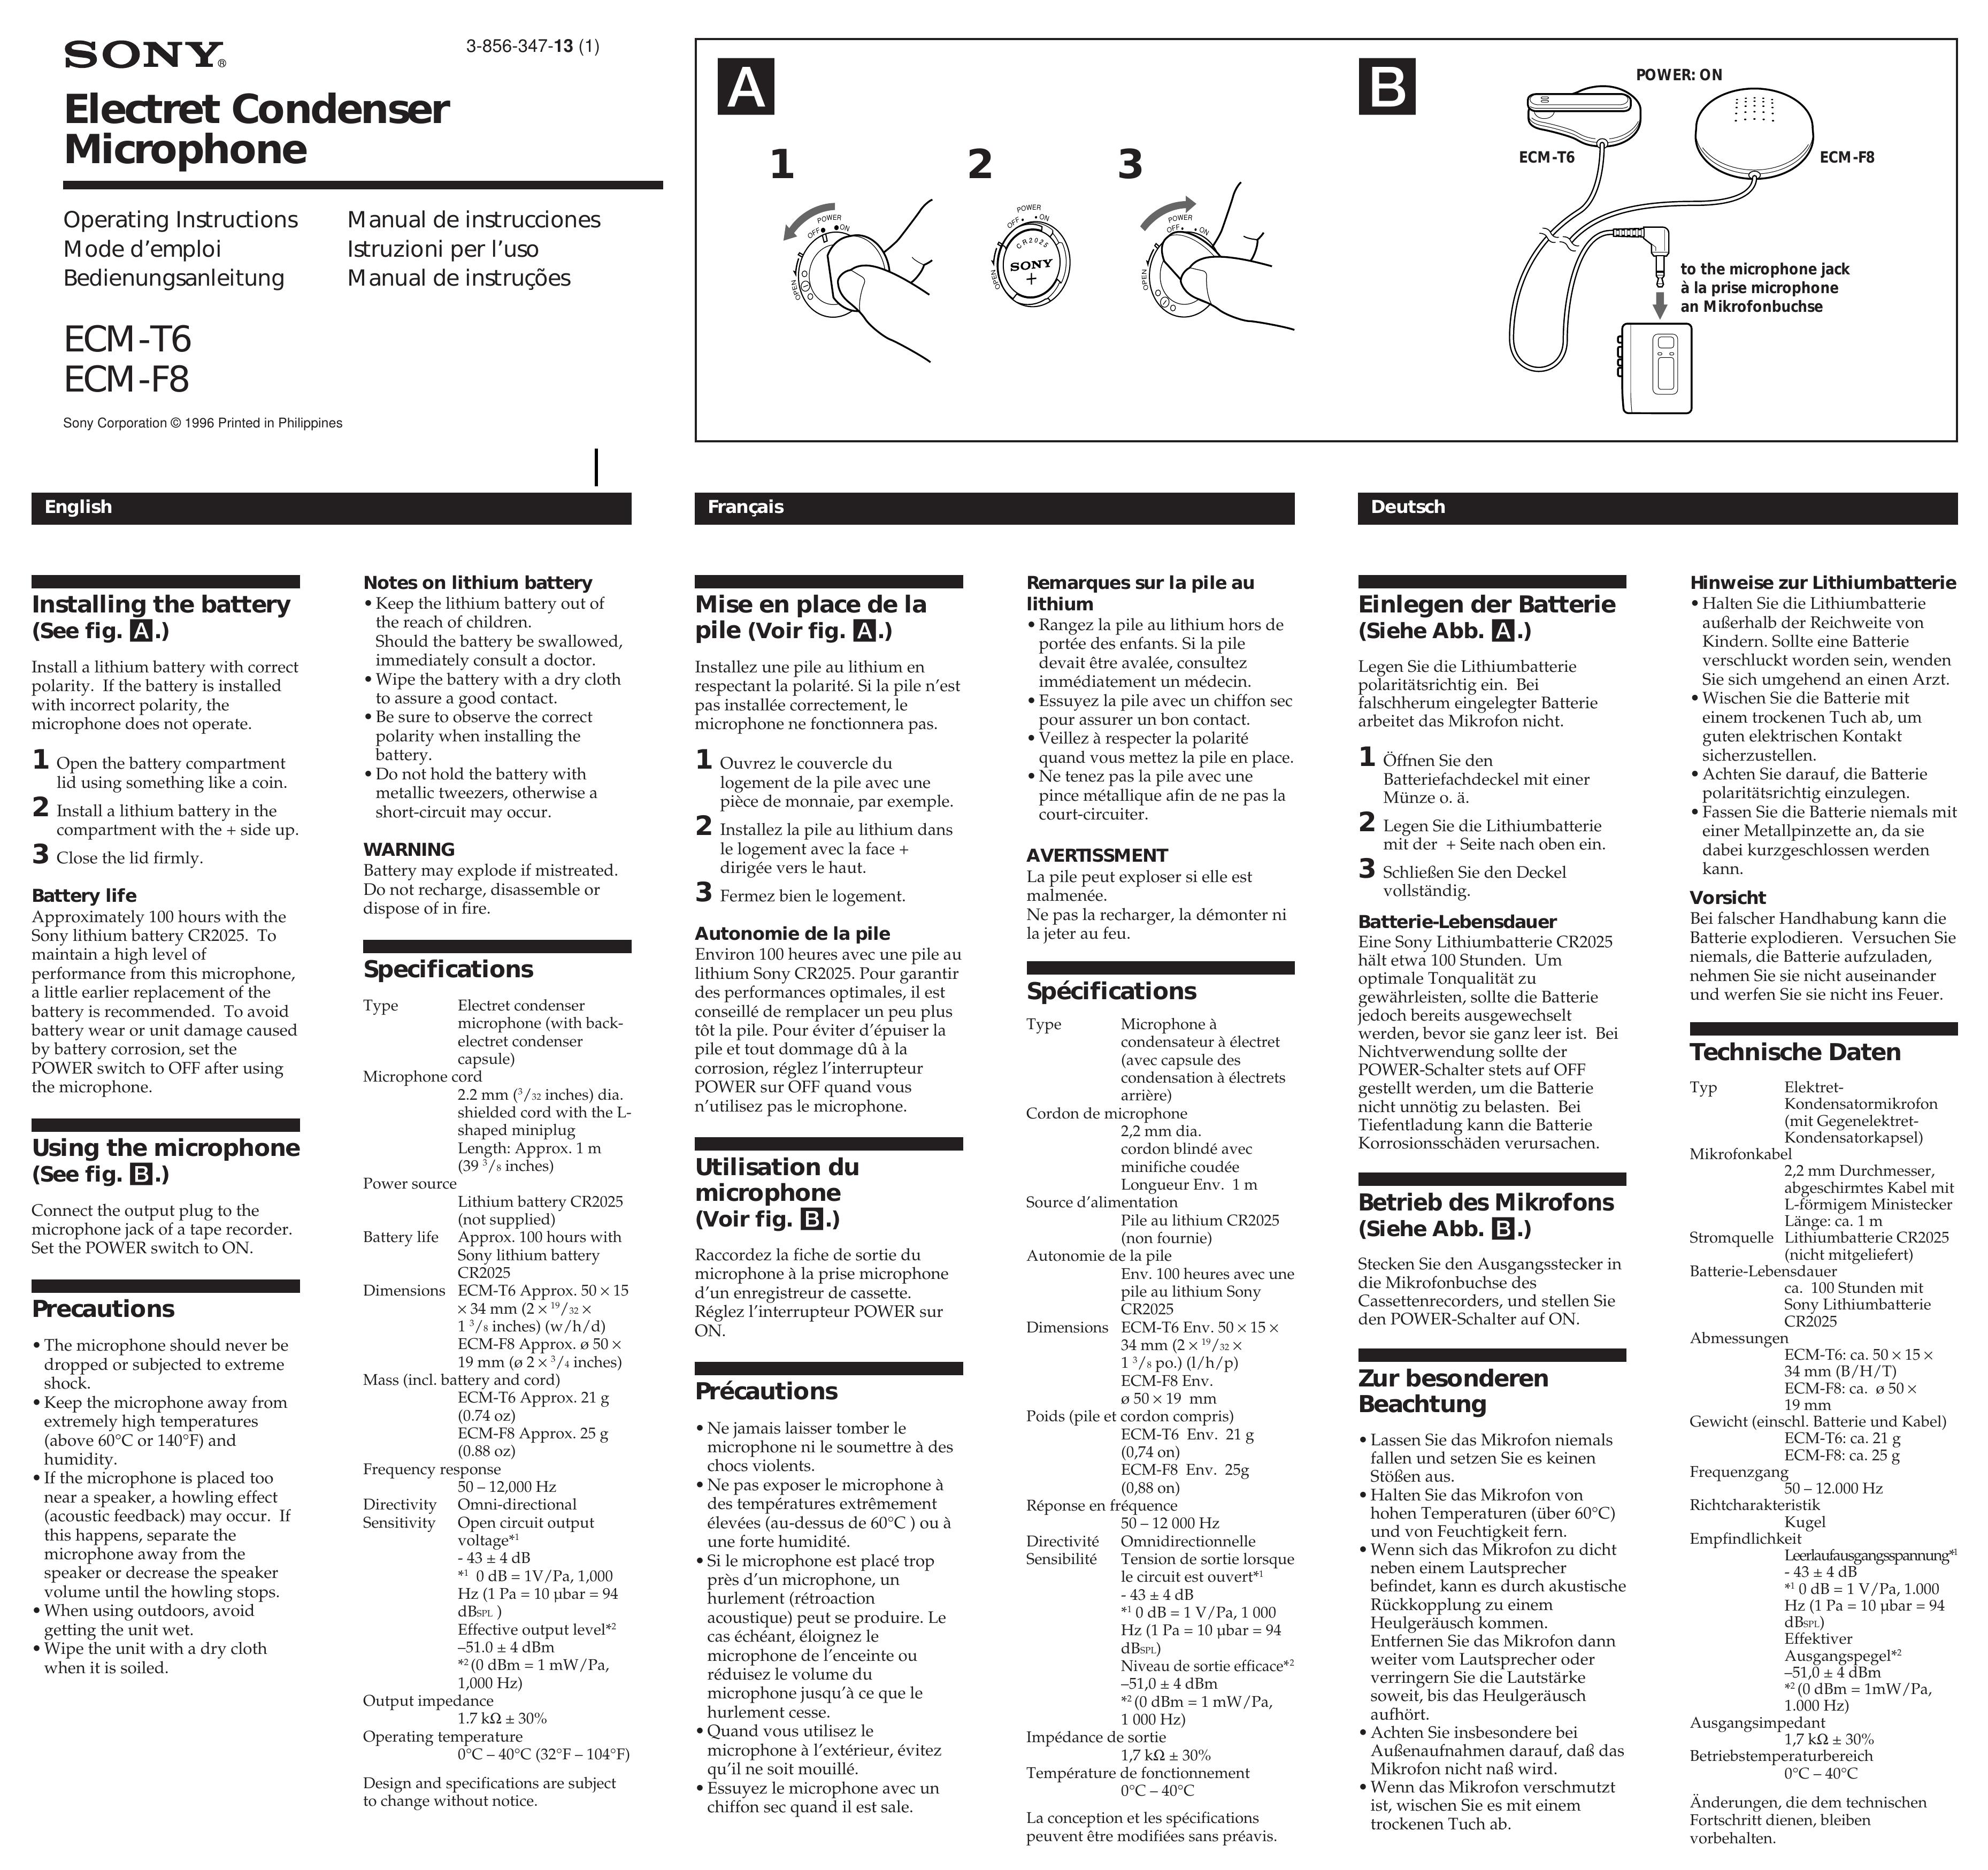 Sony ECM-F8 Microphone User Manual